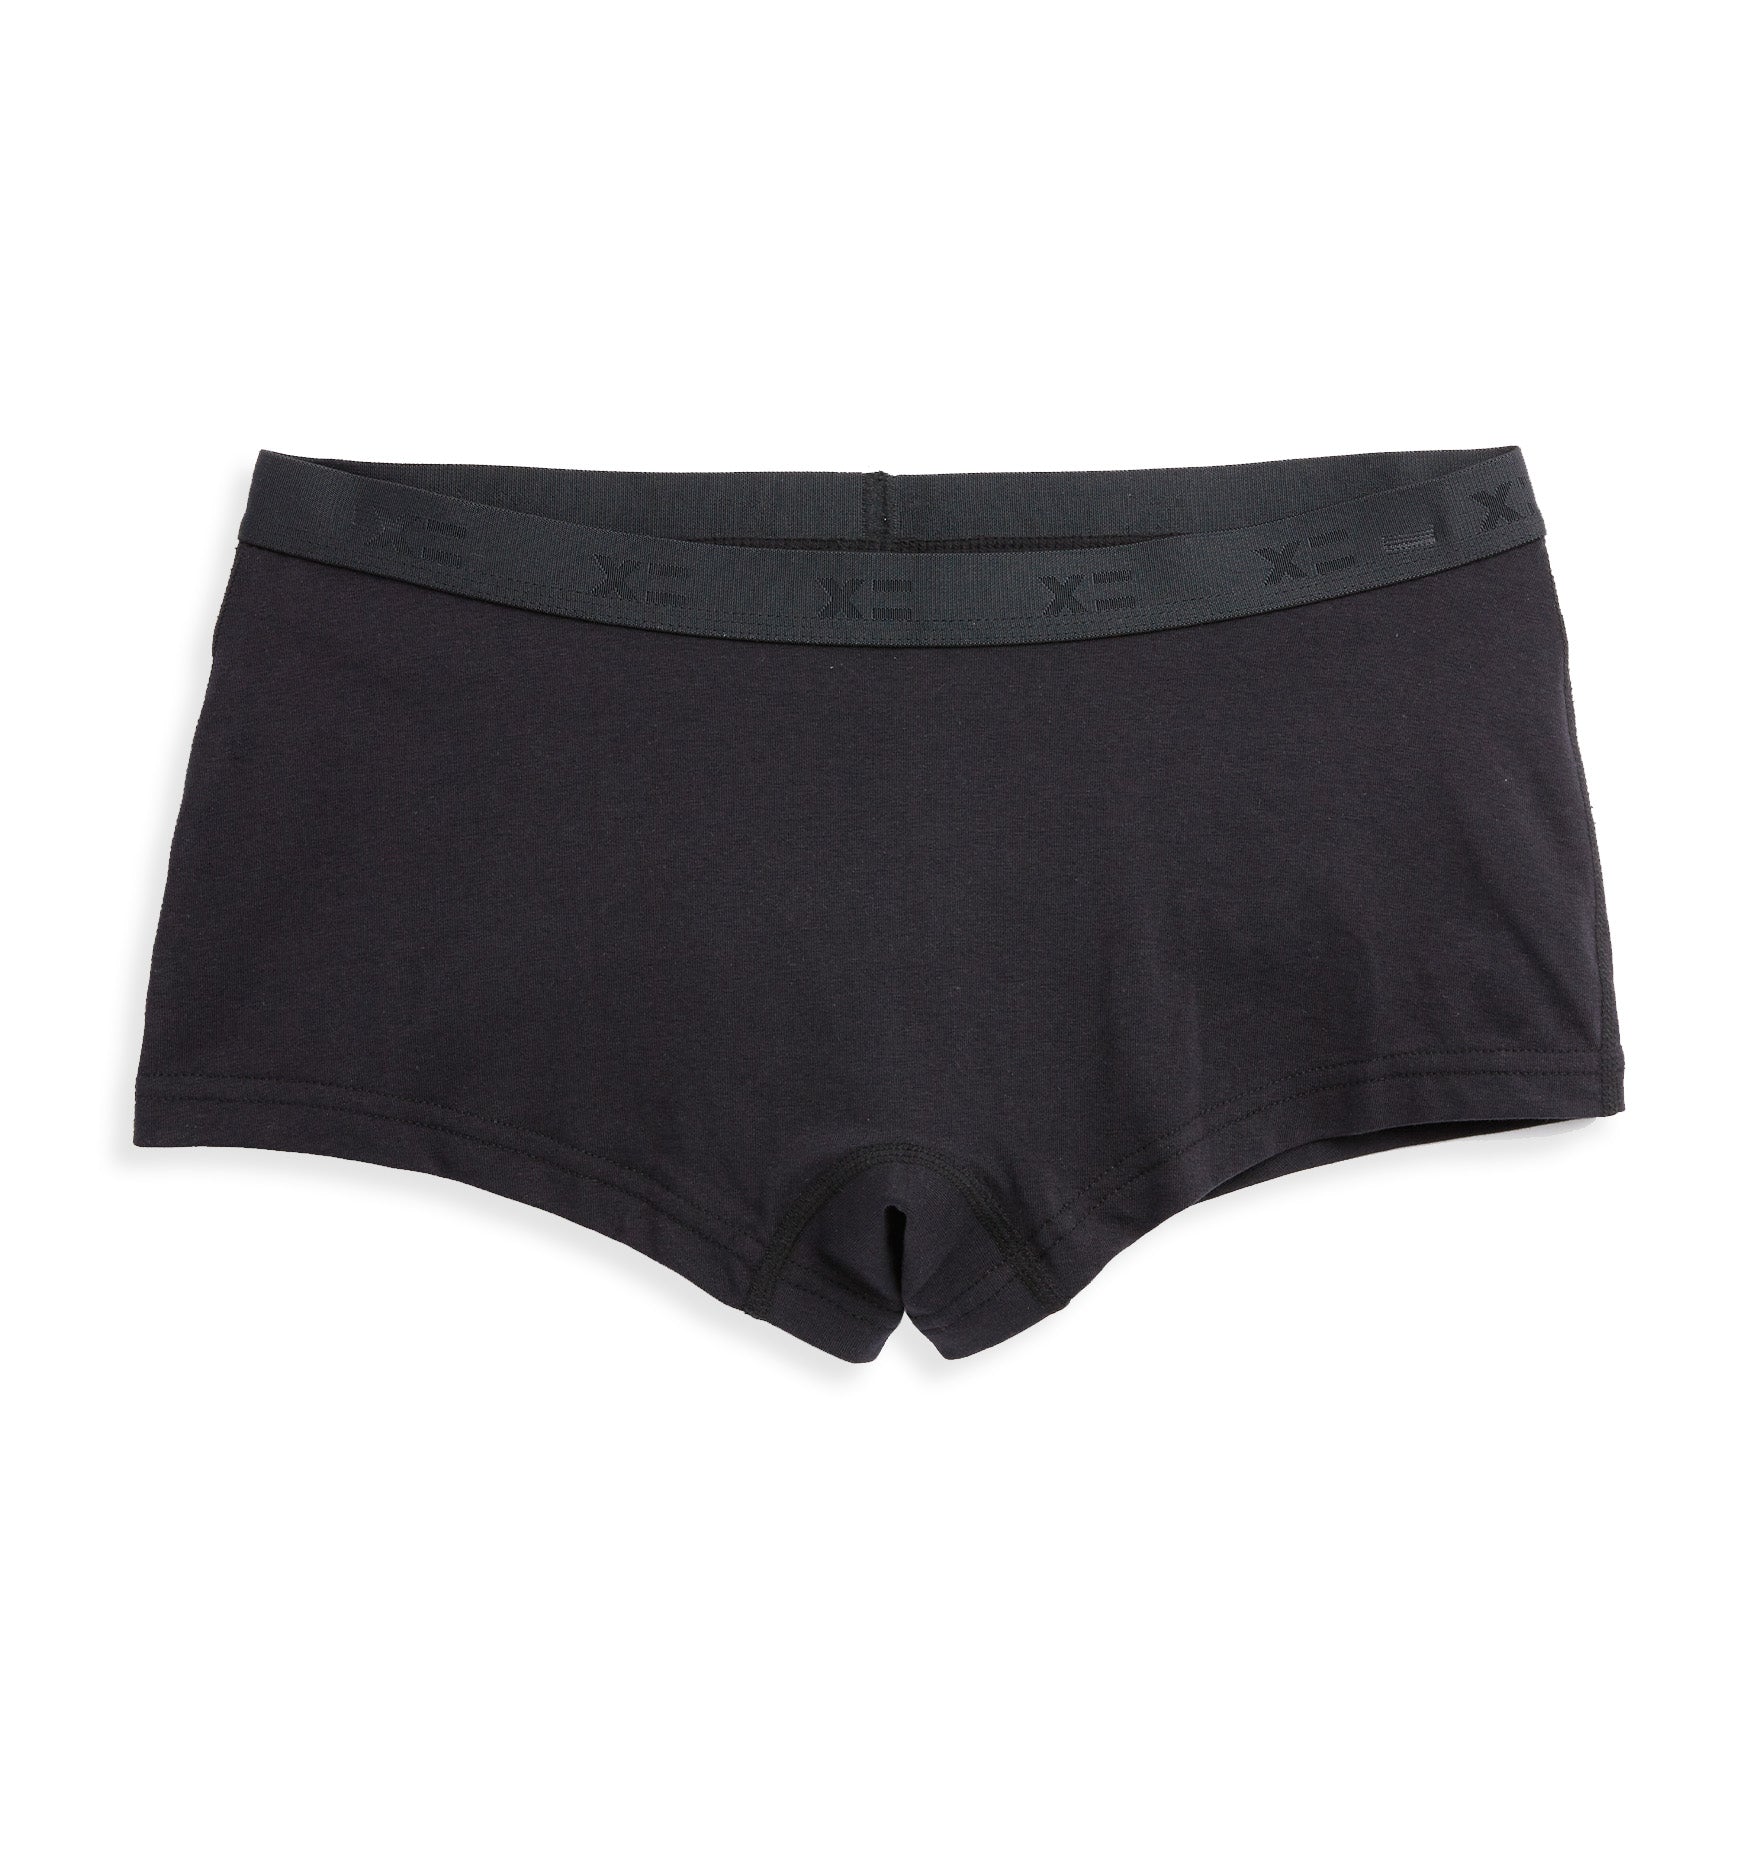 Cute Panties Boyshorts For Women Boy Short Thick Cotton Underwear